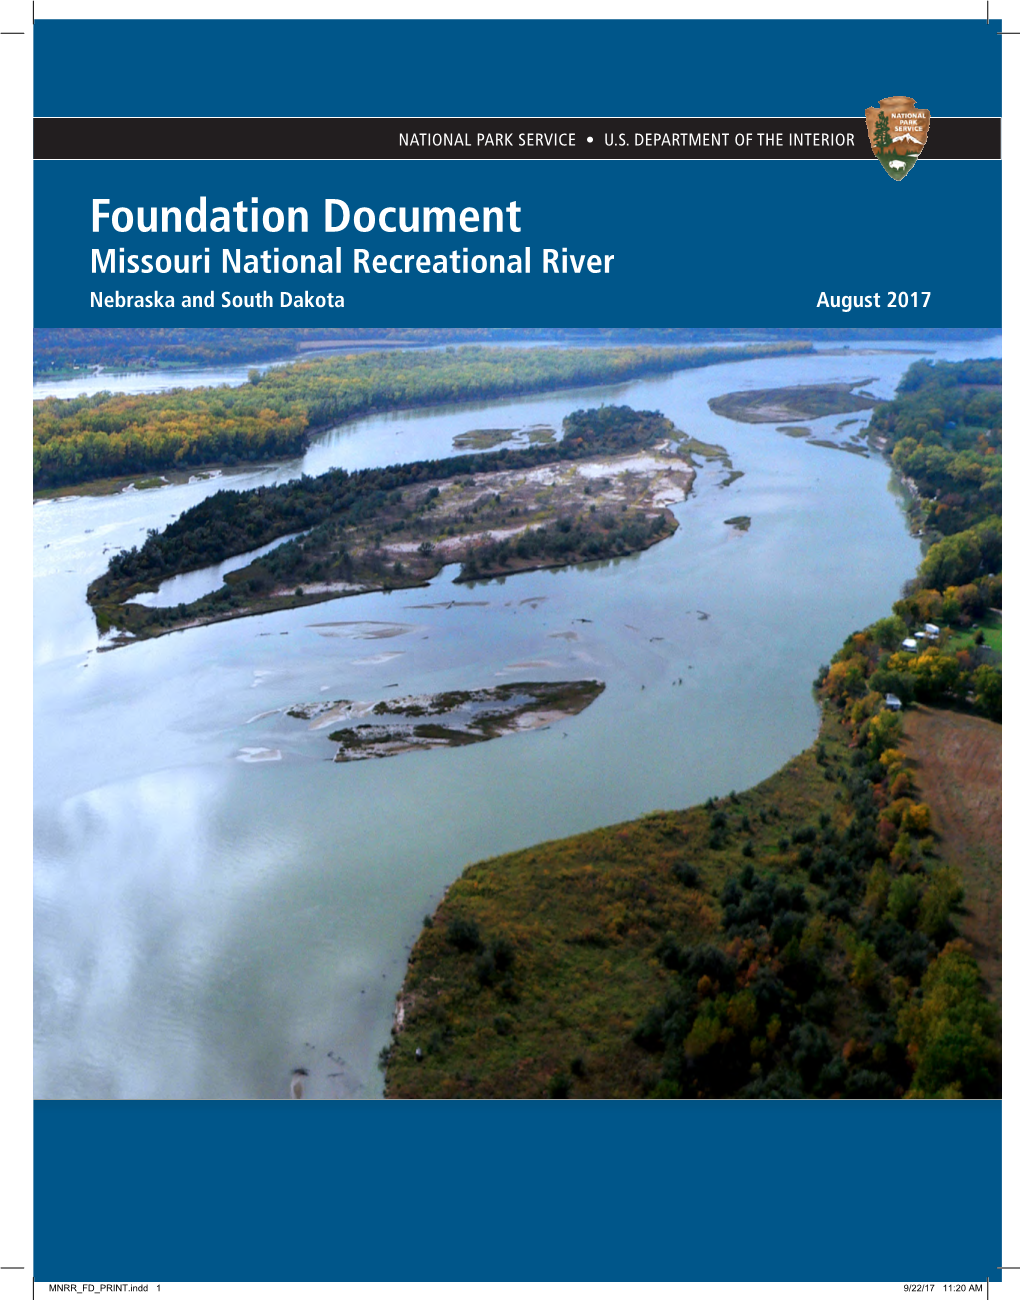 Foundation Document Missouri National Recreational River Nebraska and South Dakota August 2017